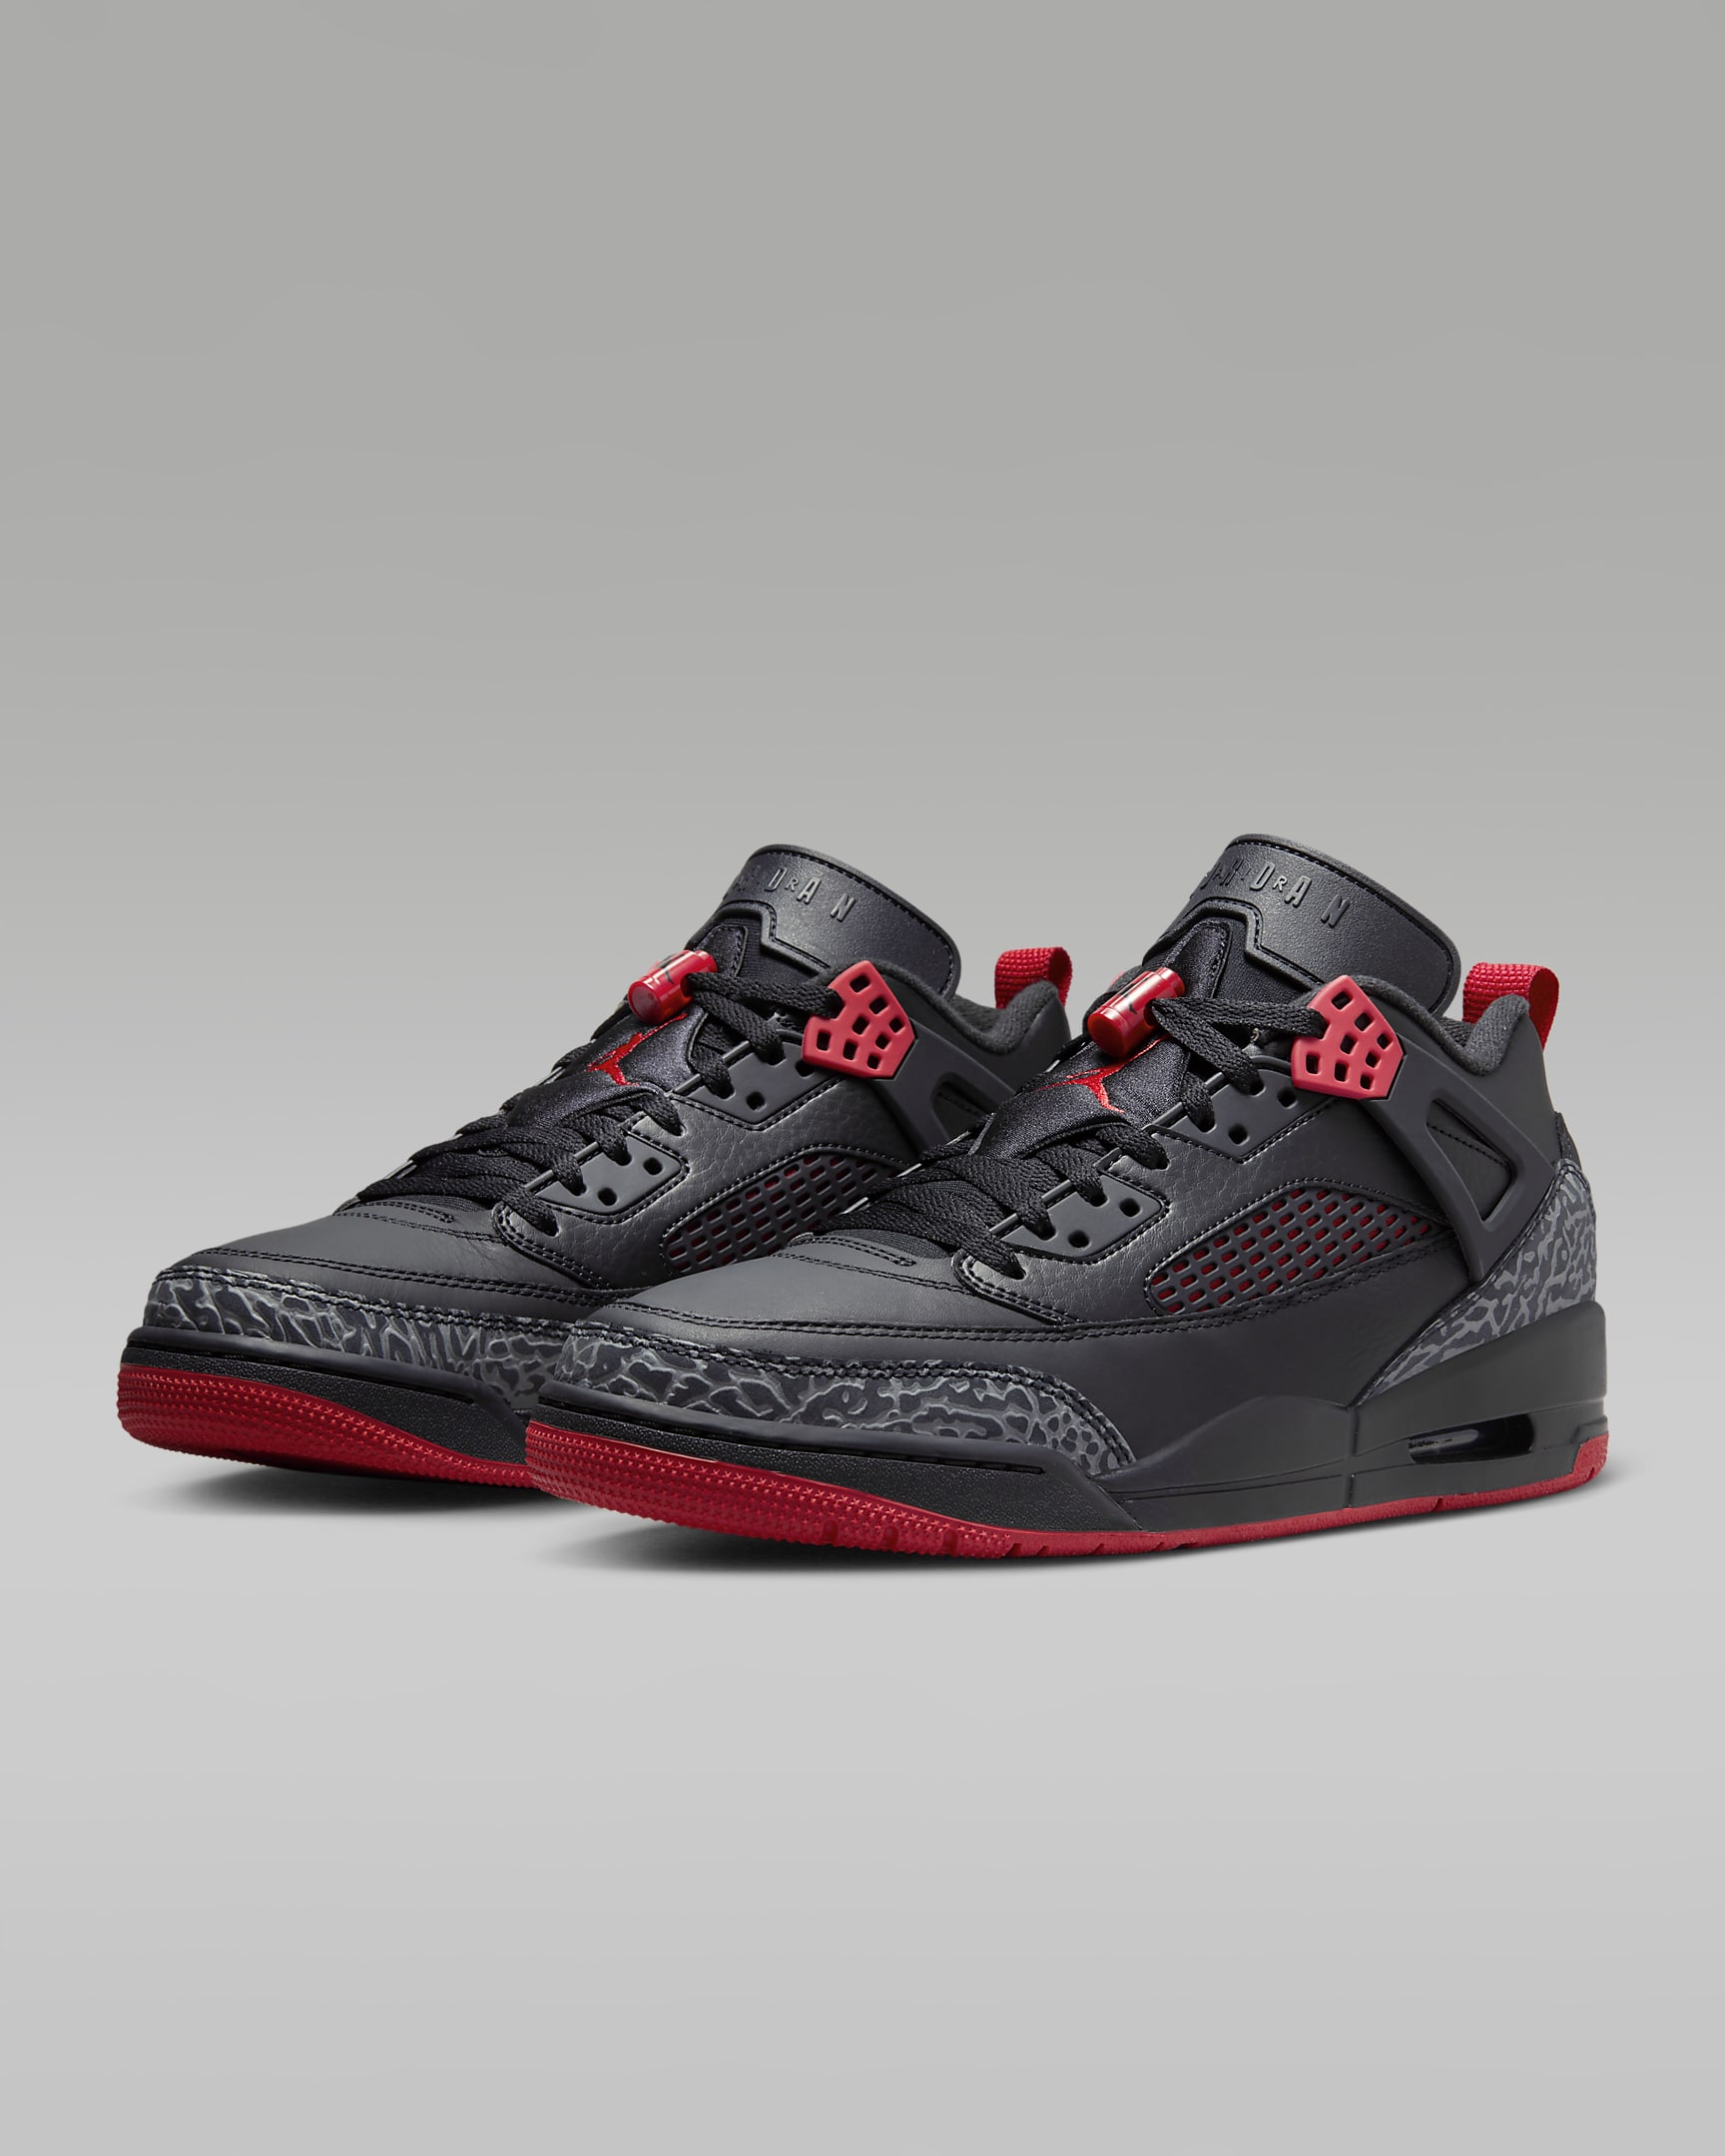 Nike Jordan Spizike Low Men’s Shoe Review: Is This the Ultimate Hybrid?